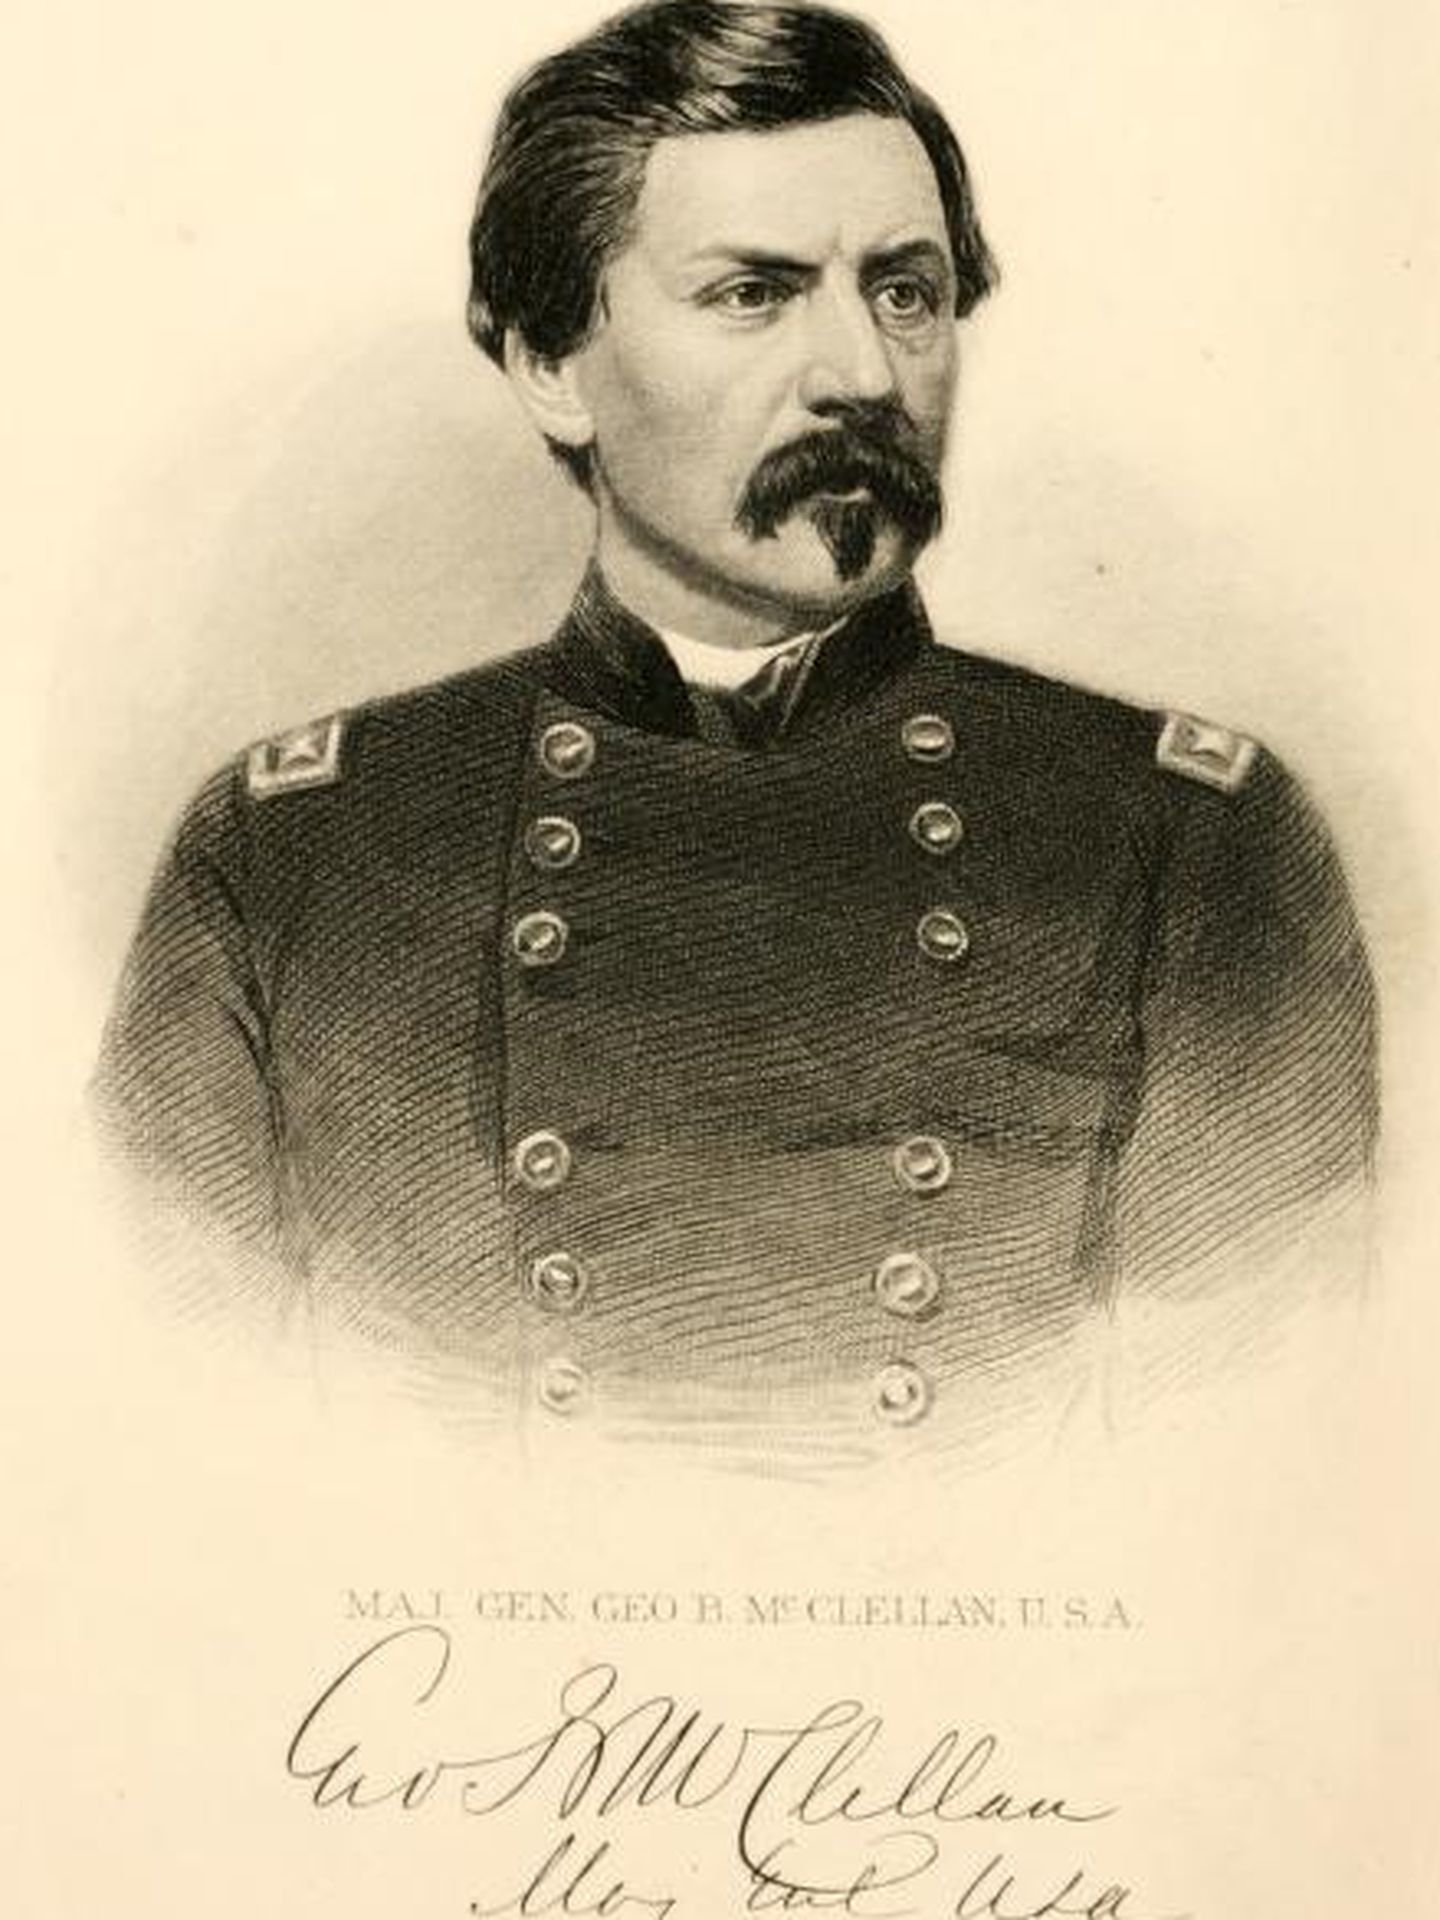 Pinche aquí para leer el informe del general McClellan.